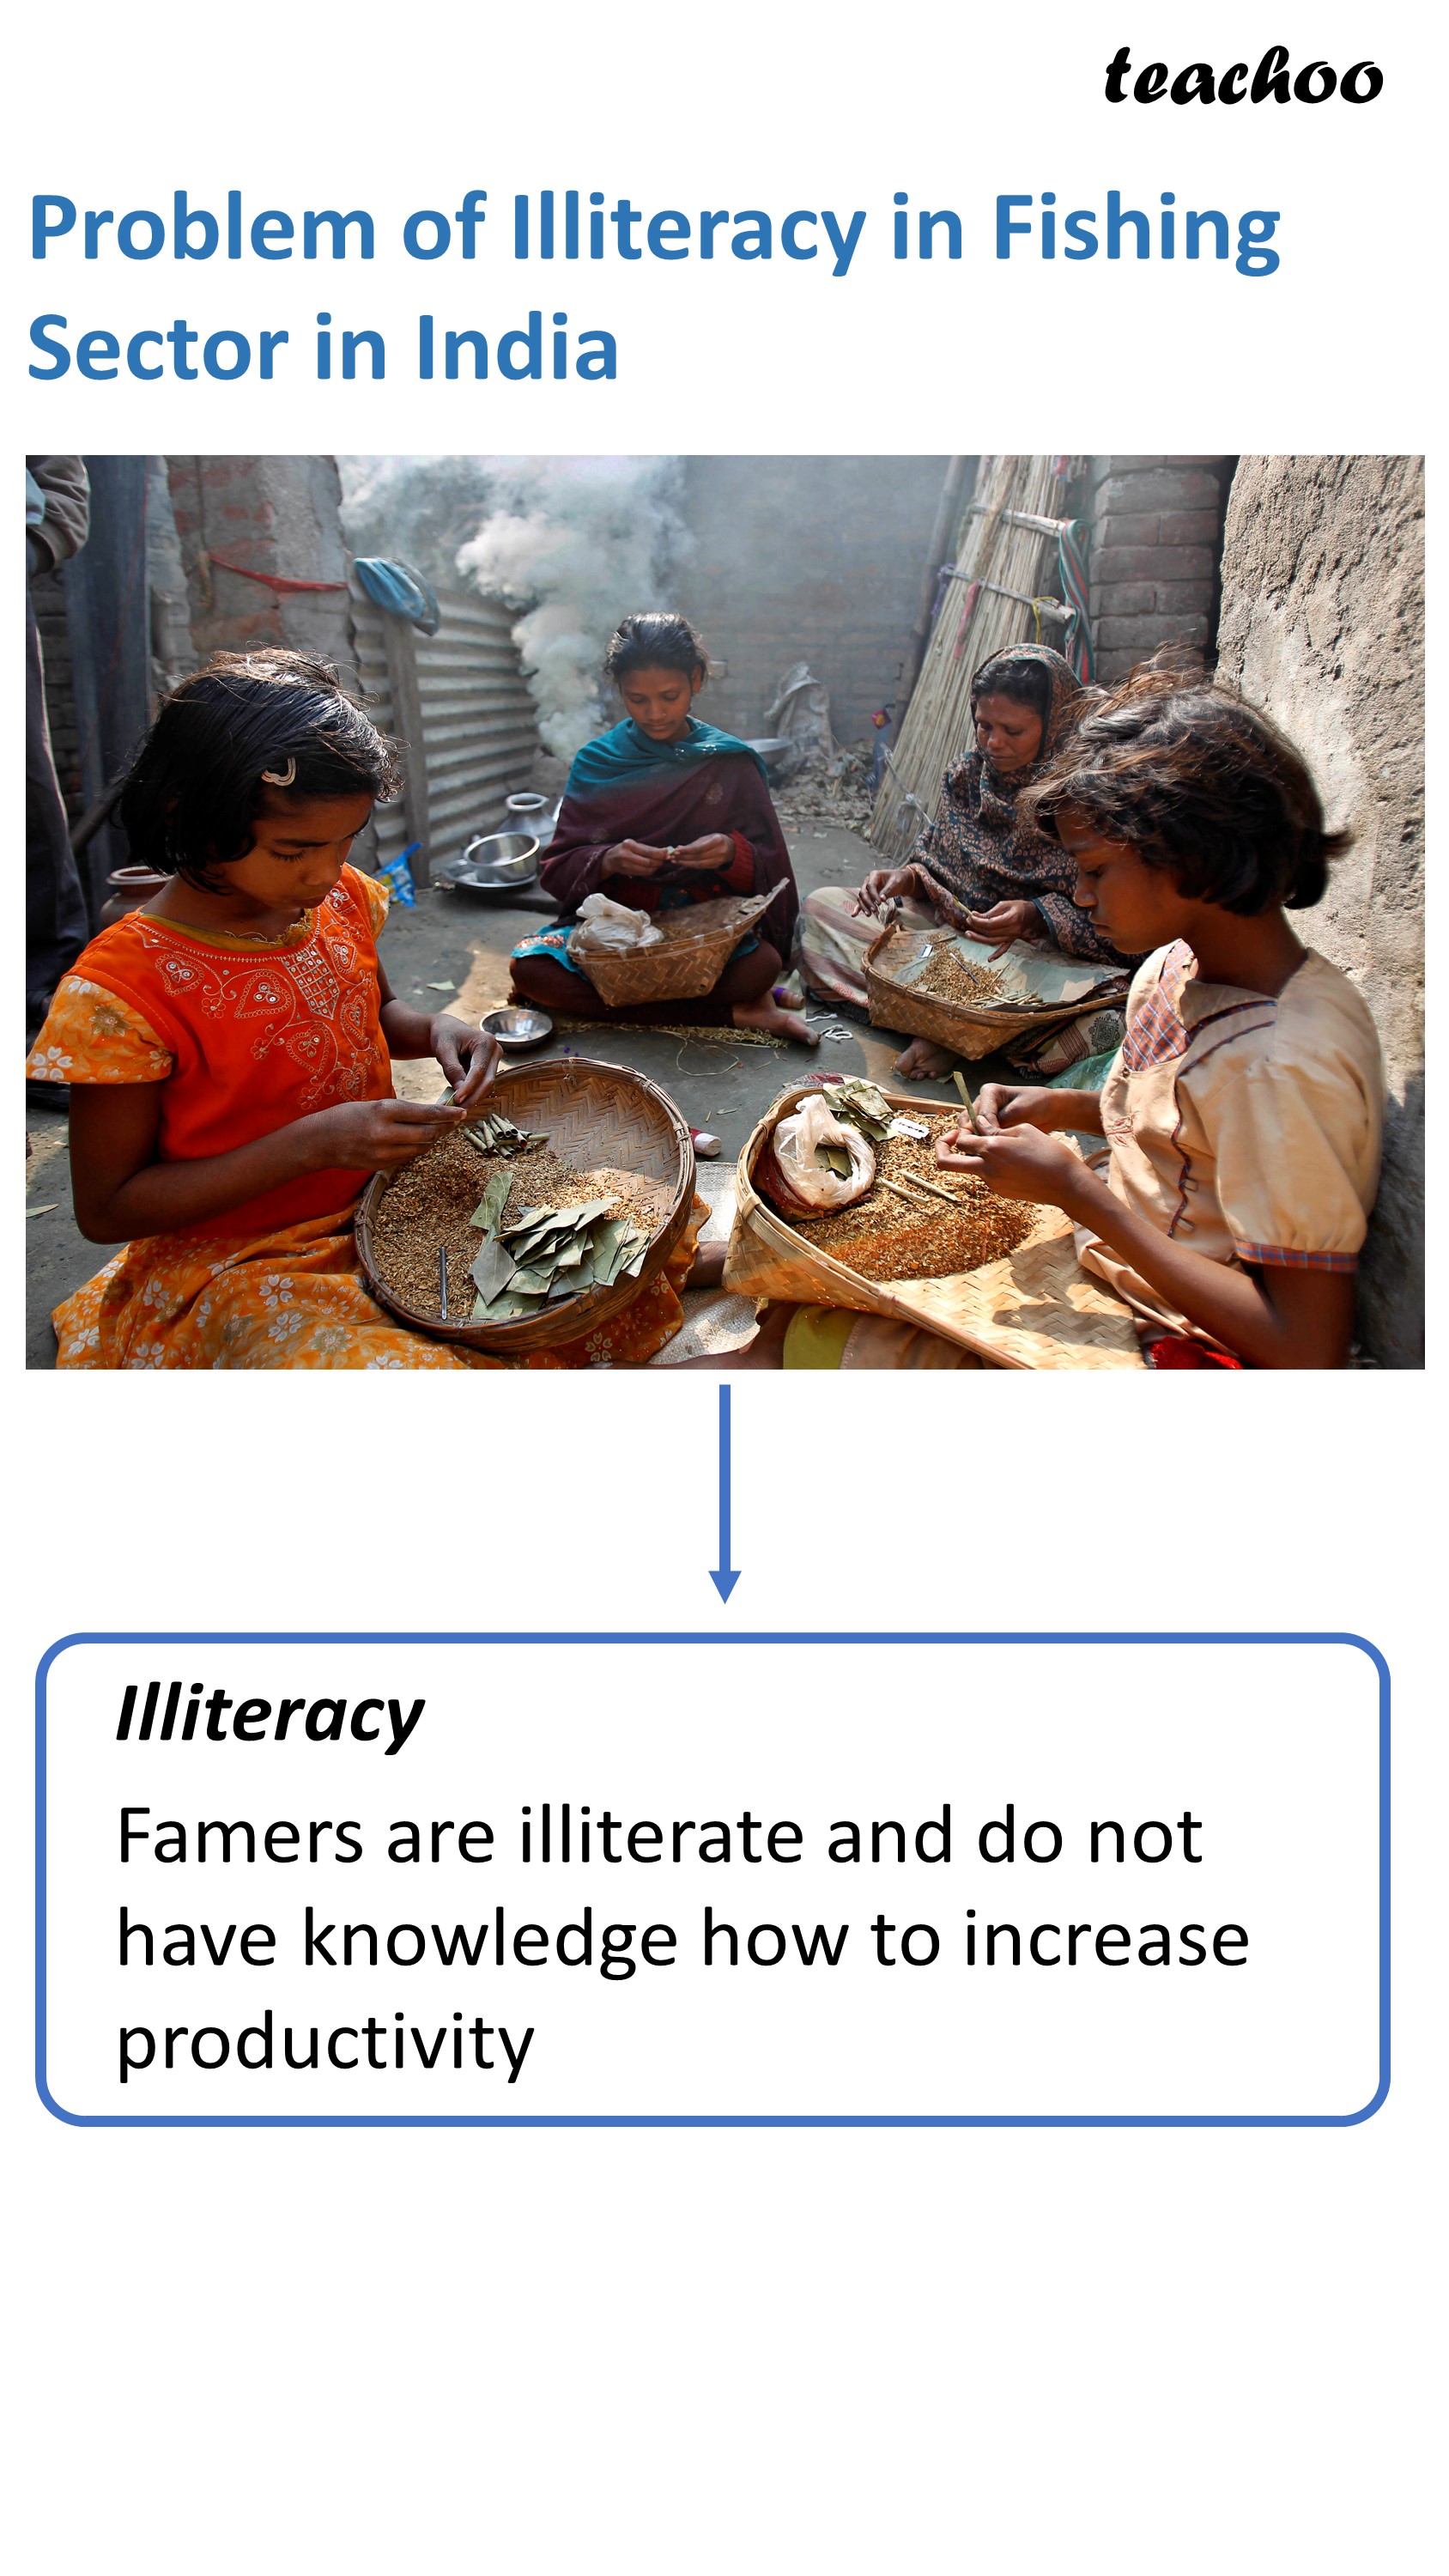 Problem of illiteracy in Fishing Sector in India - Teachoo.JPG